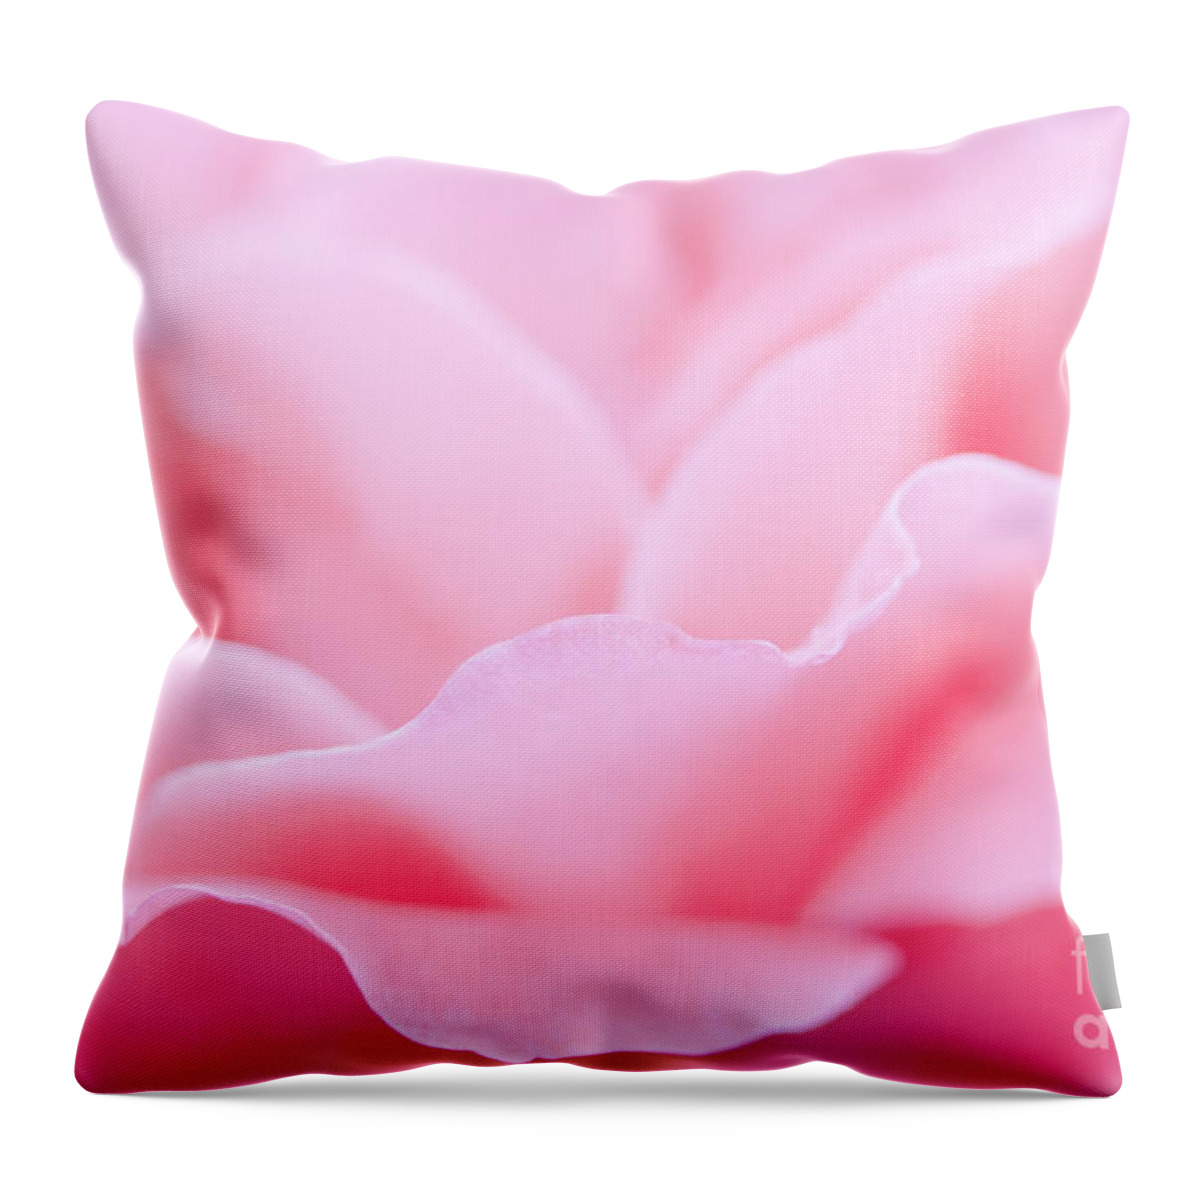 Rose Throw Pillow featuring the photograph Joyful by Patty Colabuono